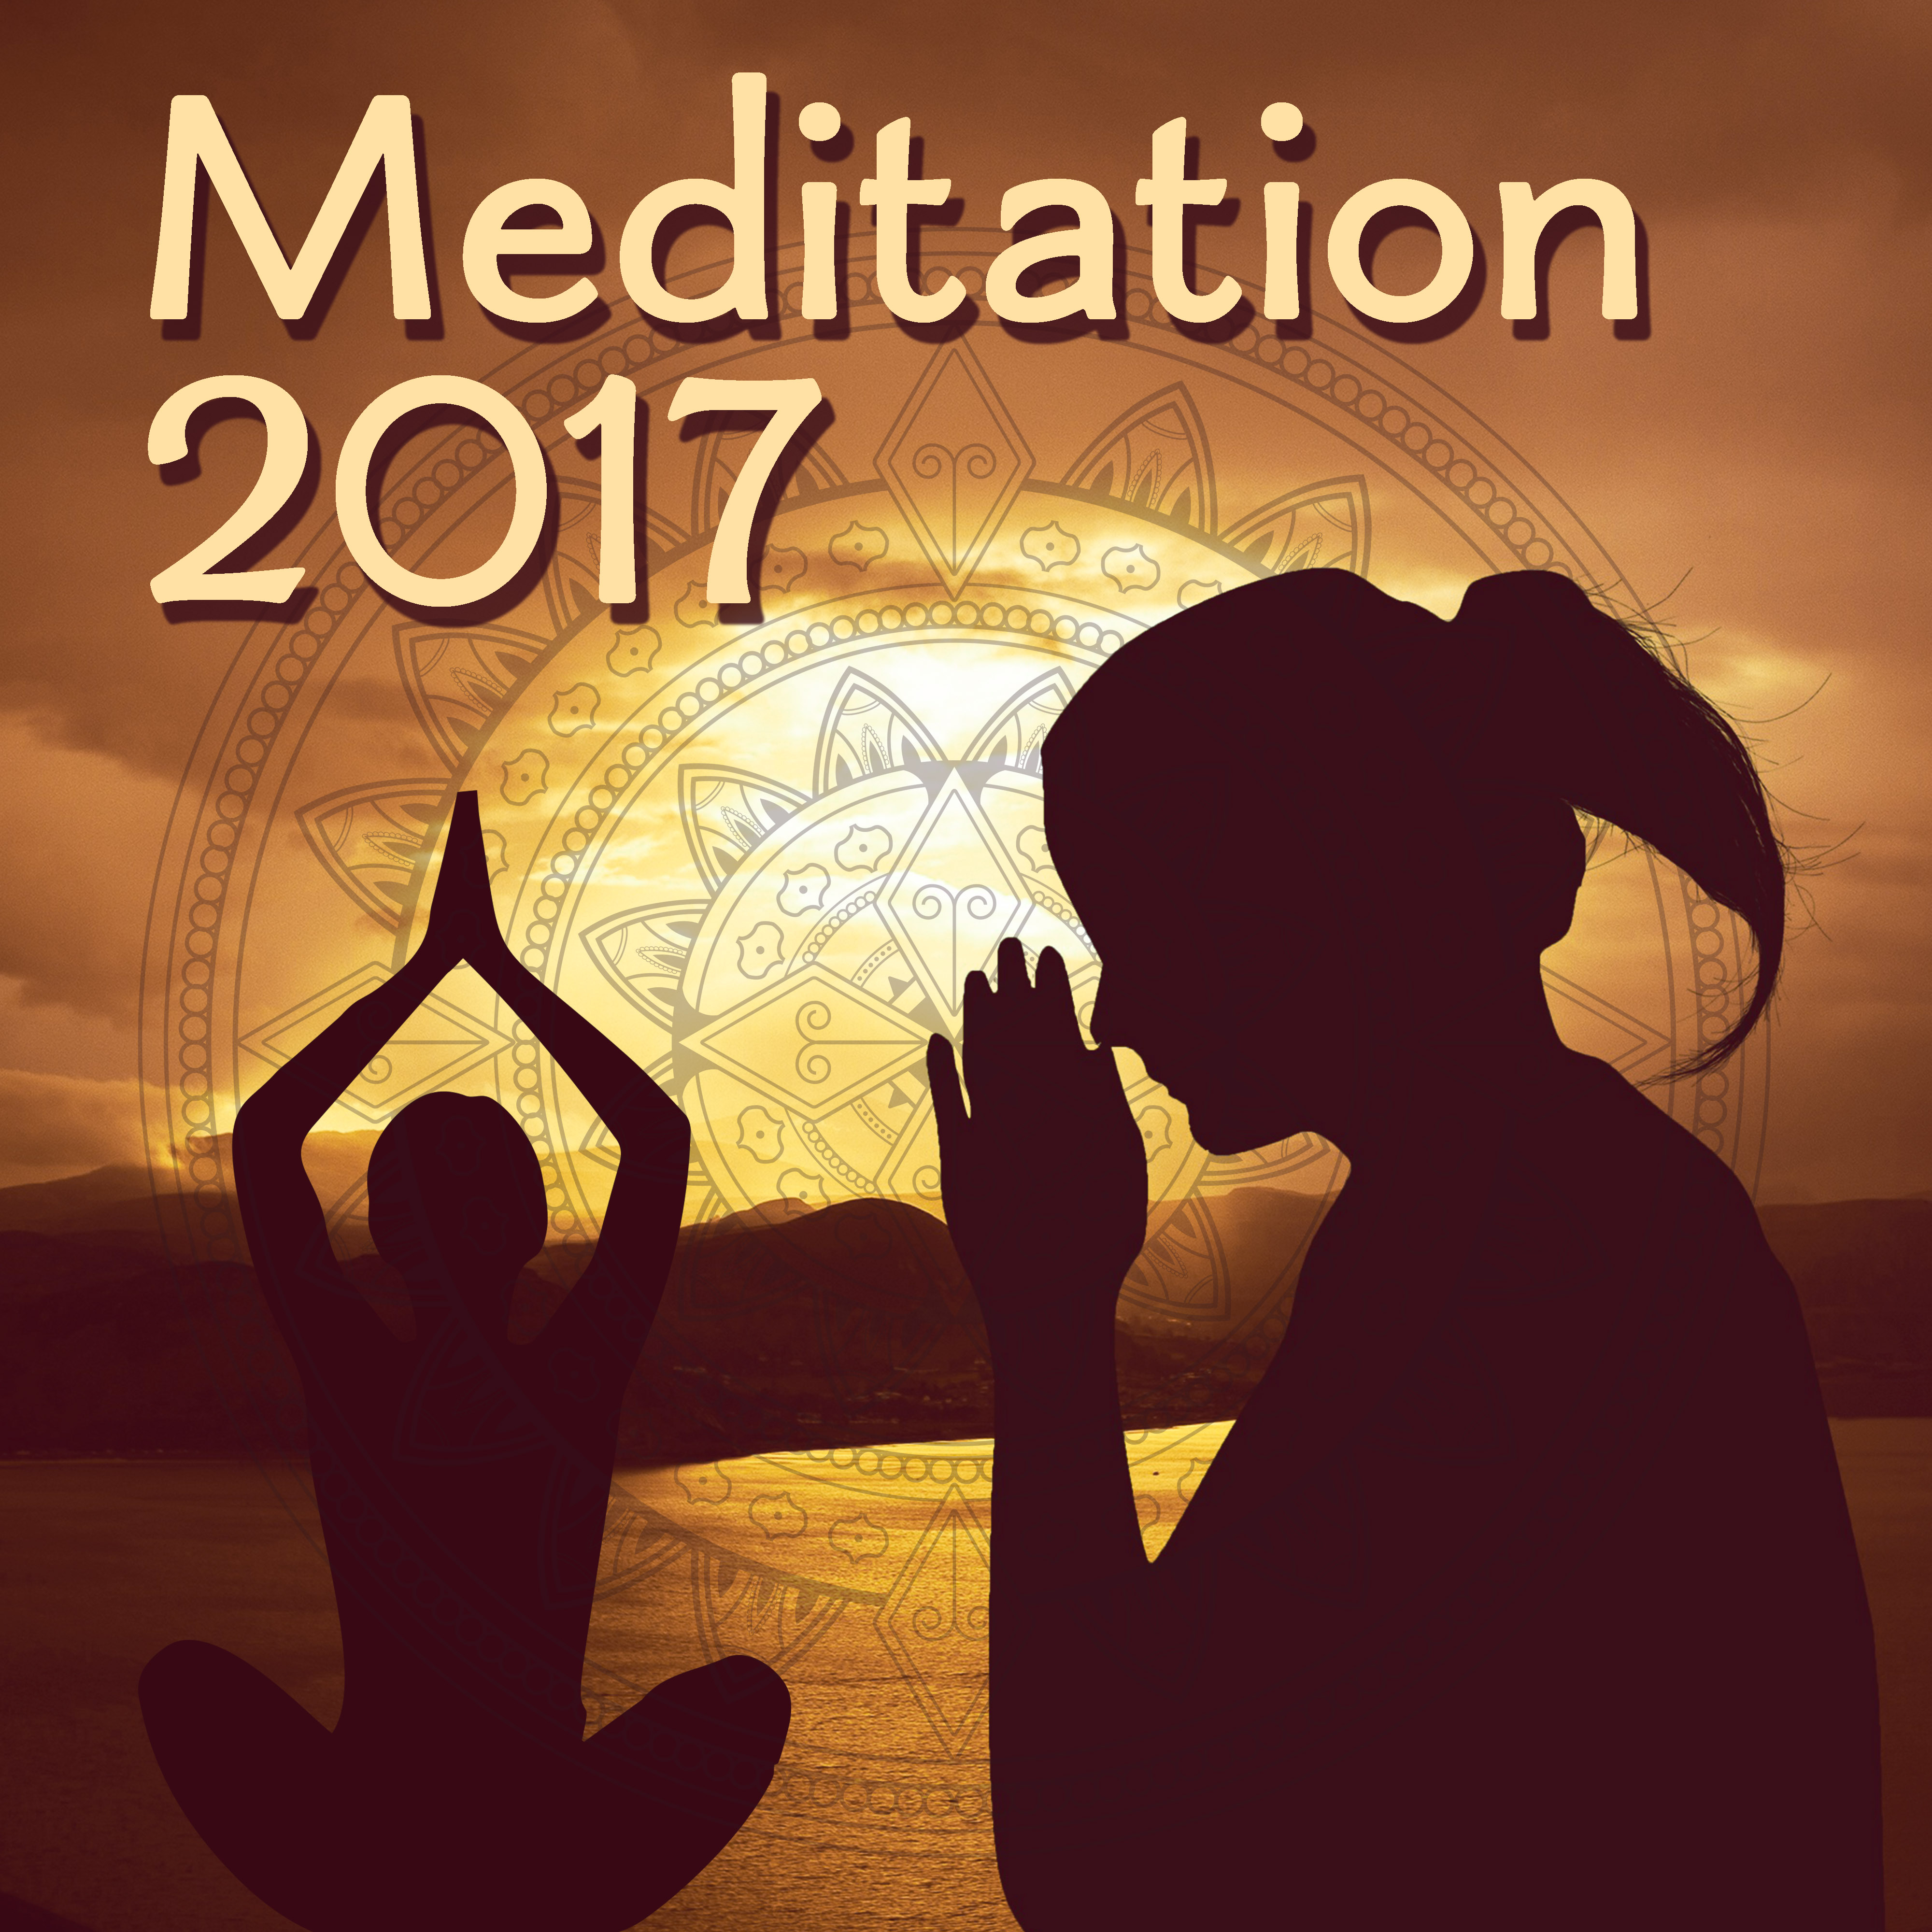 Meditation 2017  Training Yoga, Chakra Balancing, Nature Sounds for Healing, Relaxation, Yoga Meditation, Inner Tranquility